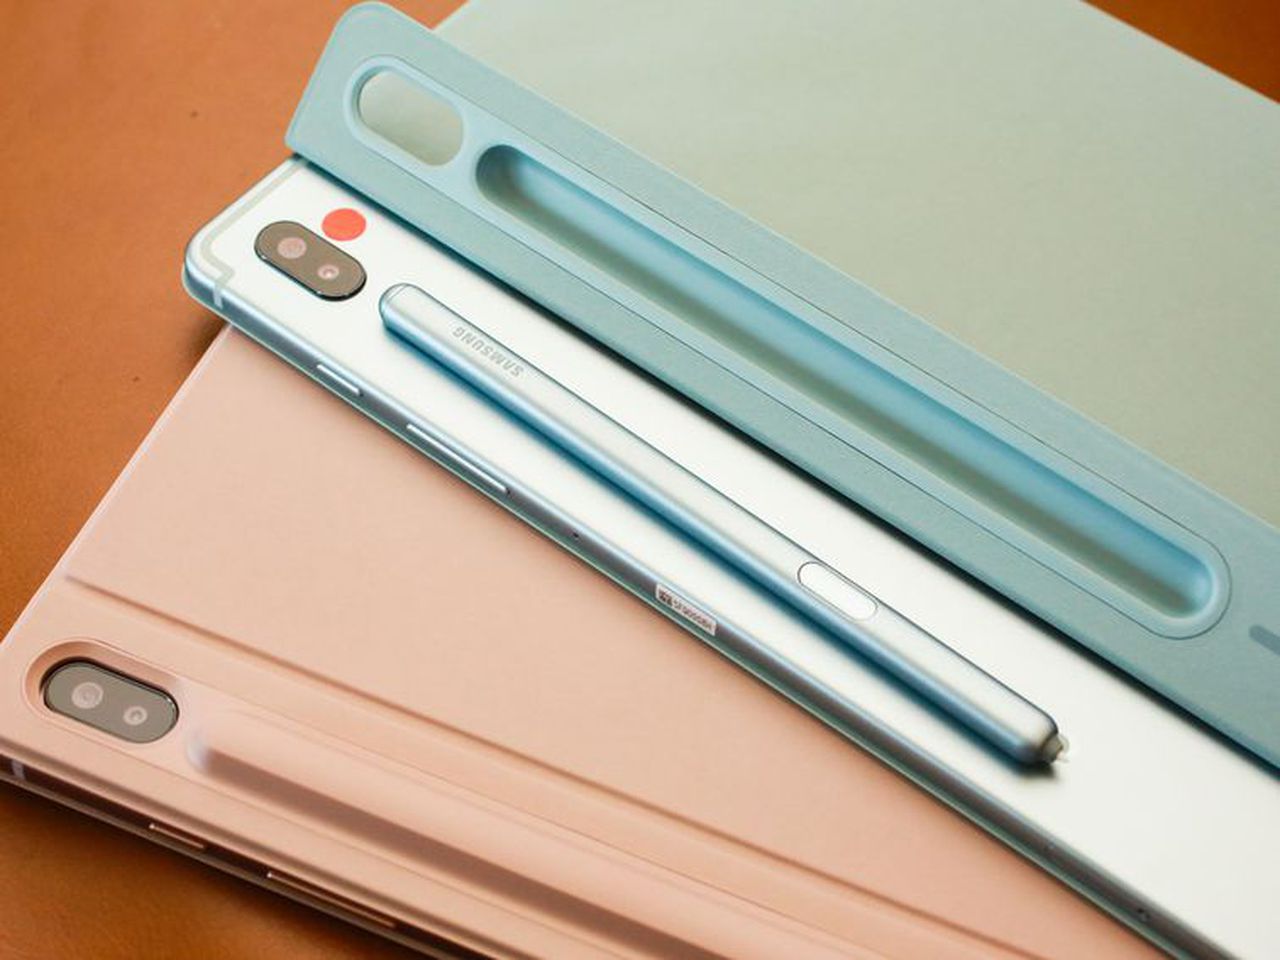 Samsung Galaxy tablets rumored to go big like iPad Pro